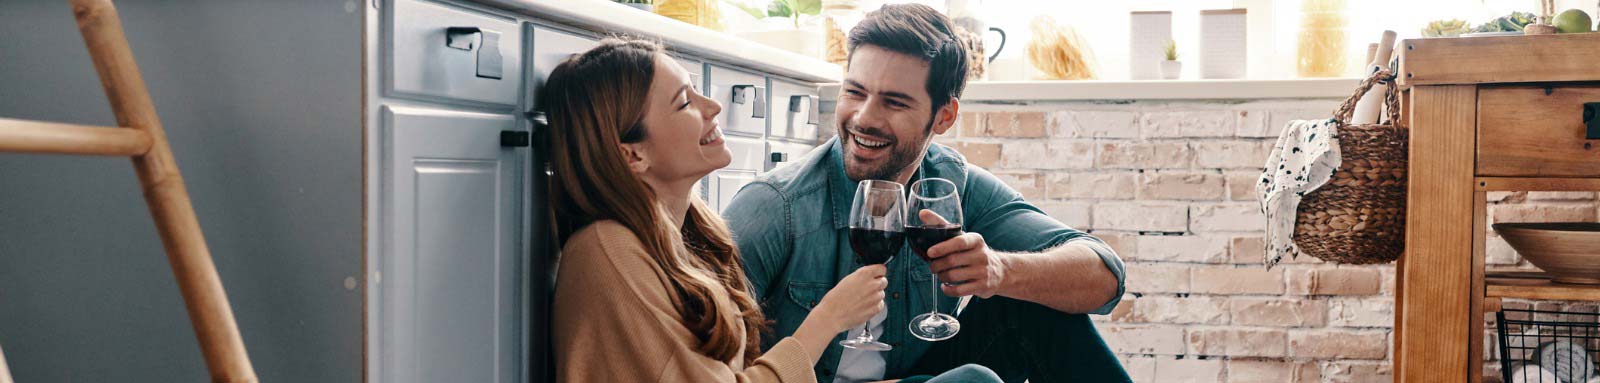 Man and woman drinking wine on kitchen floor